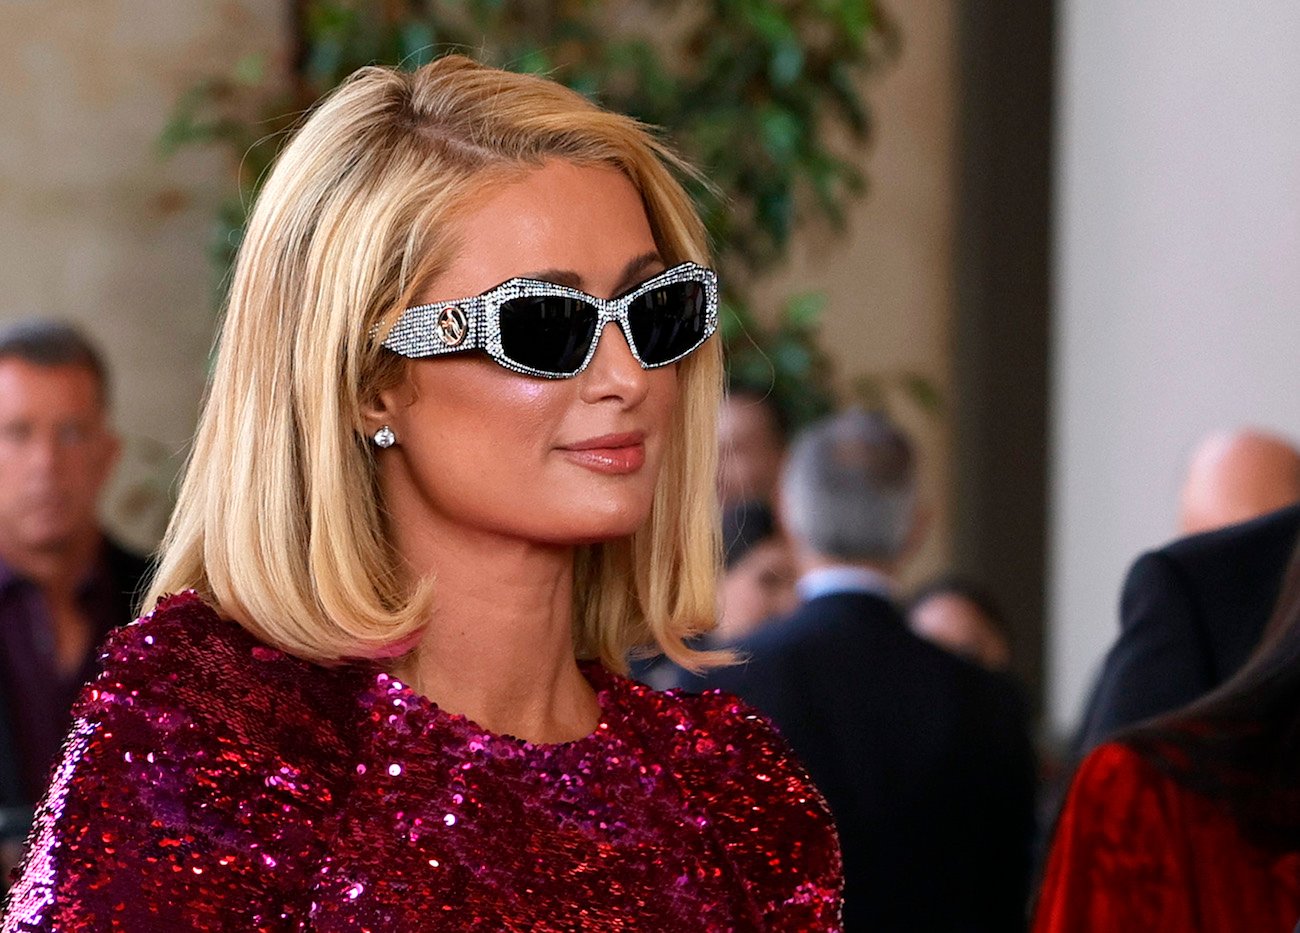 Paris Hilton smiles wearing sunglasses and a pink sequin dress